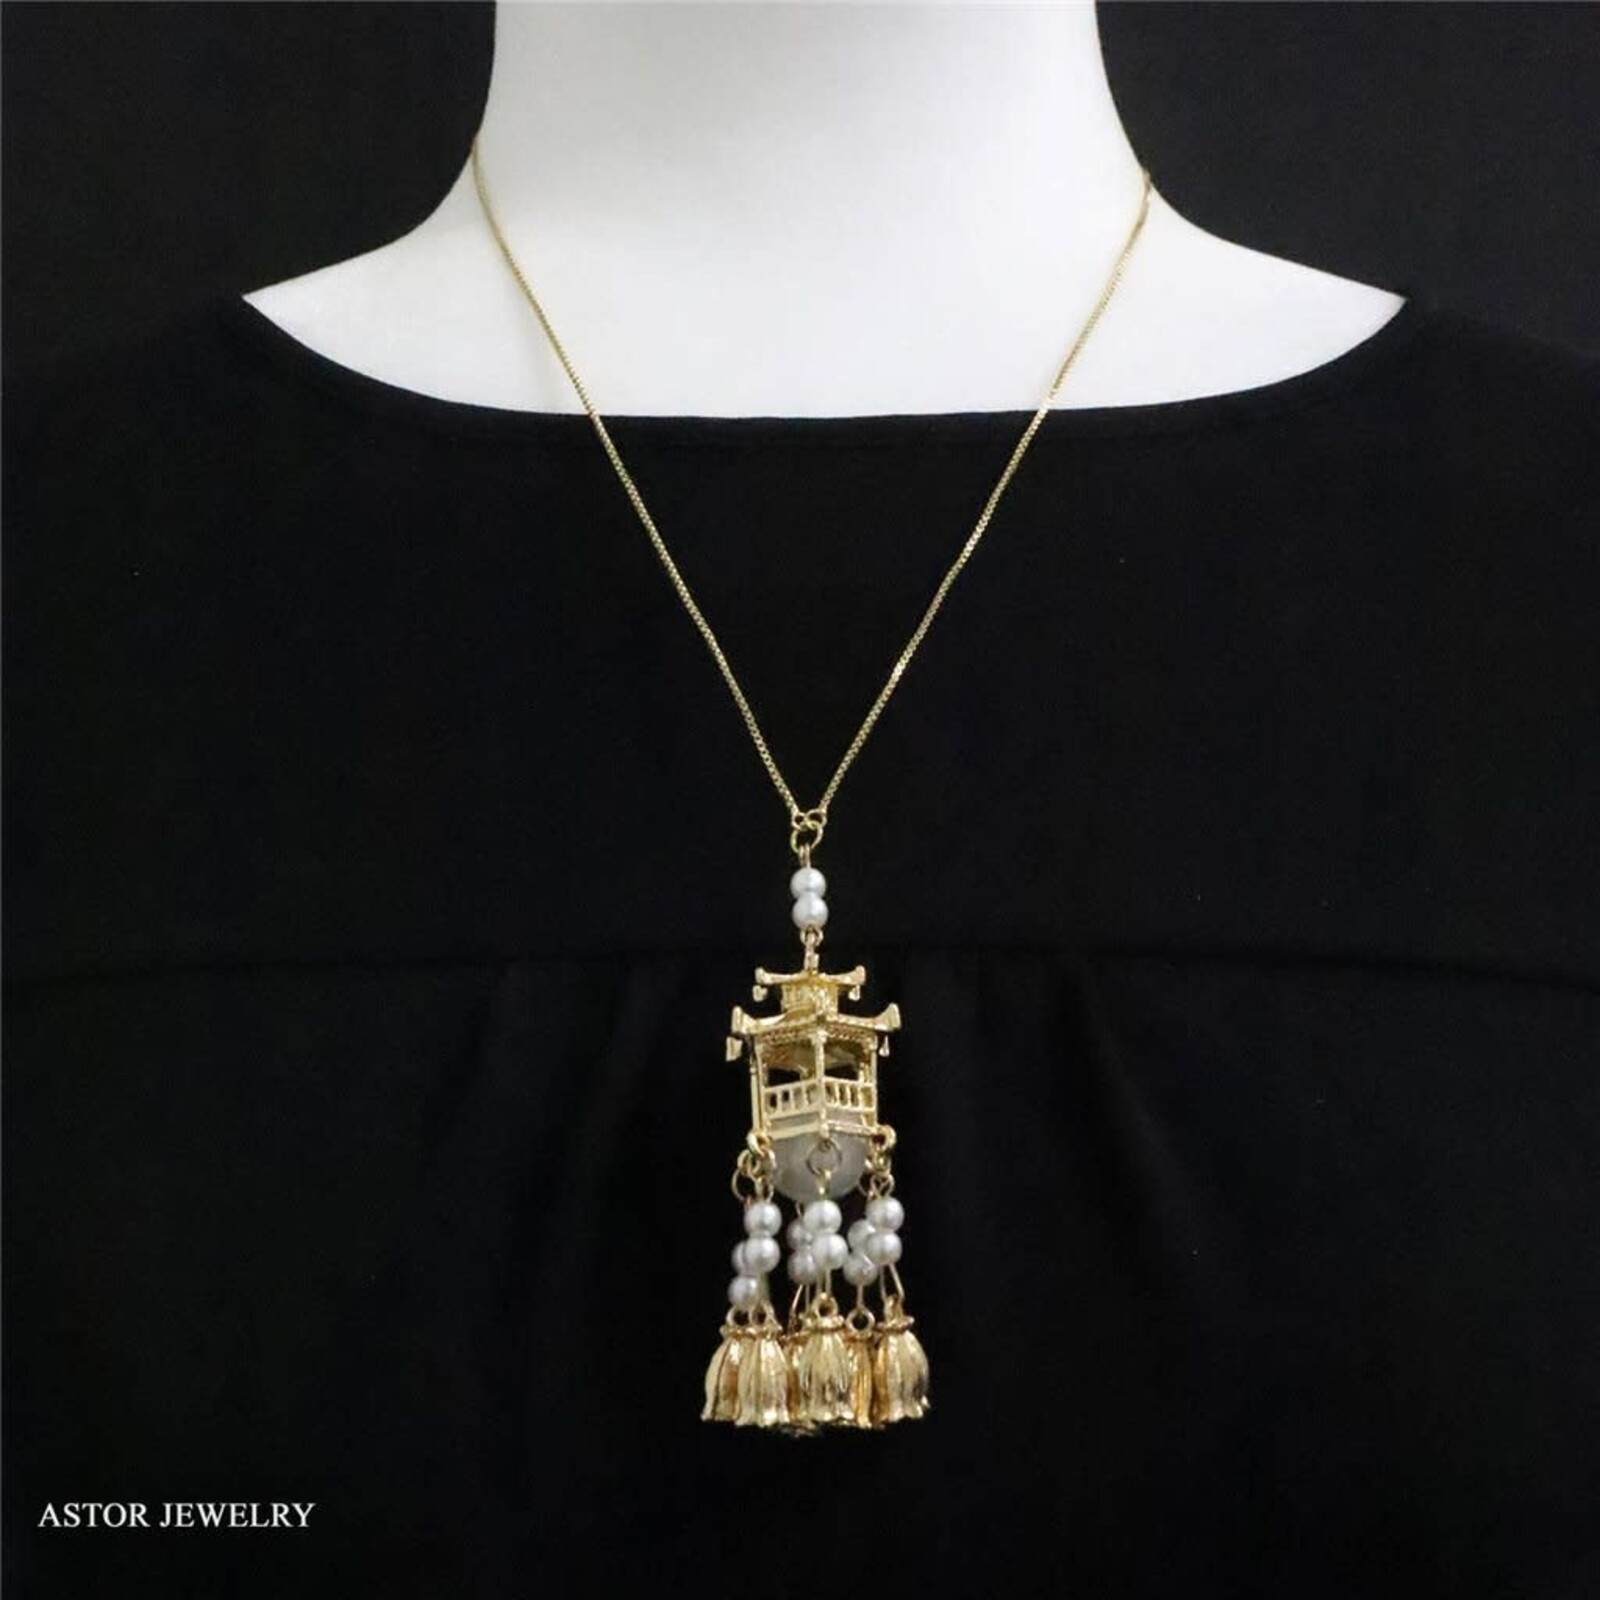 Astor Jewelry Silver Pagoda Light Pendant Necklace   24100 loading=